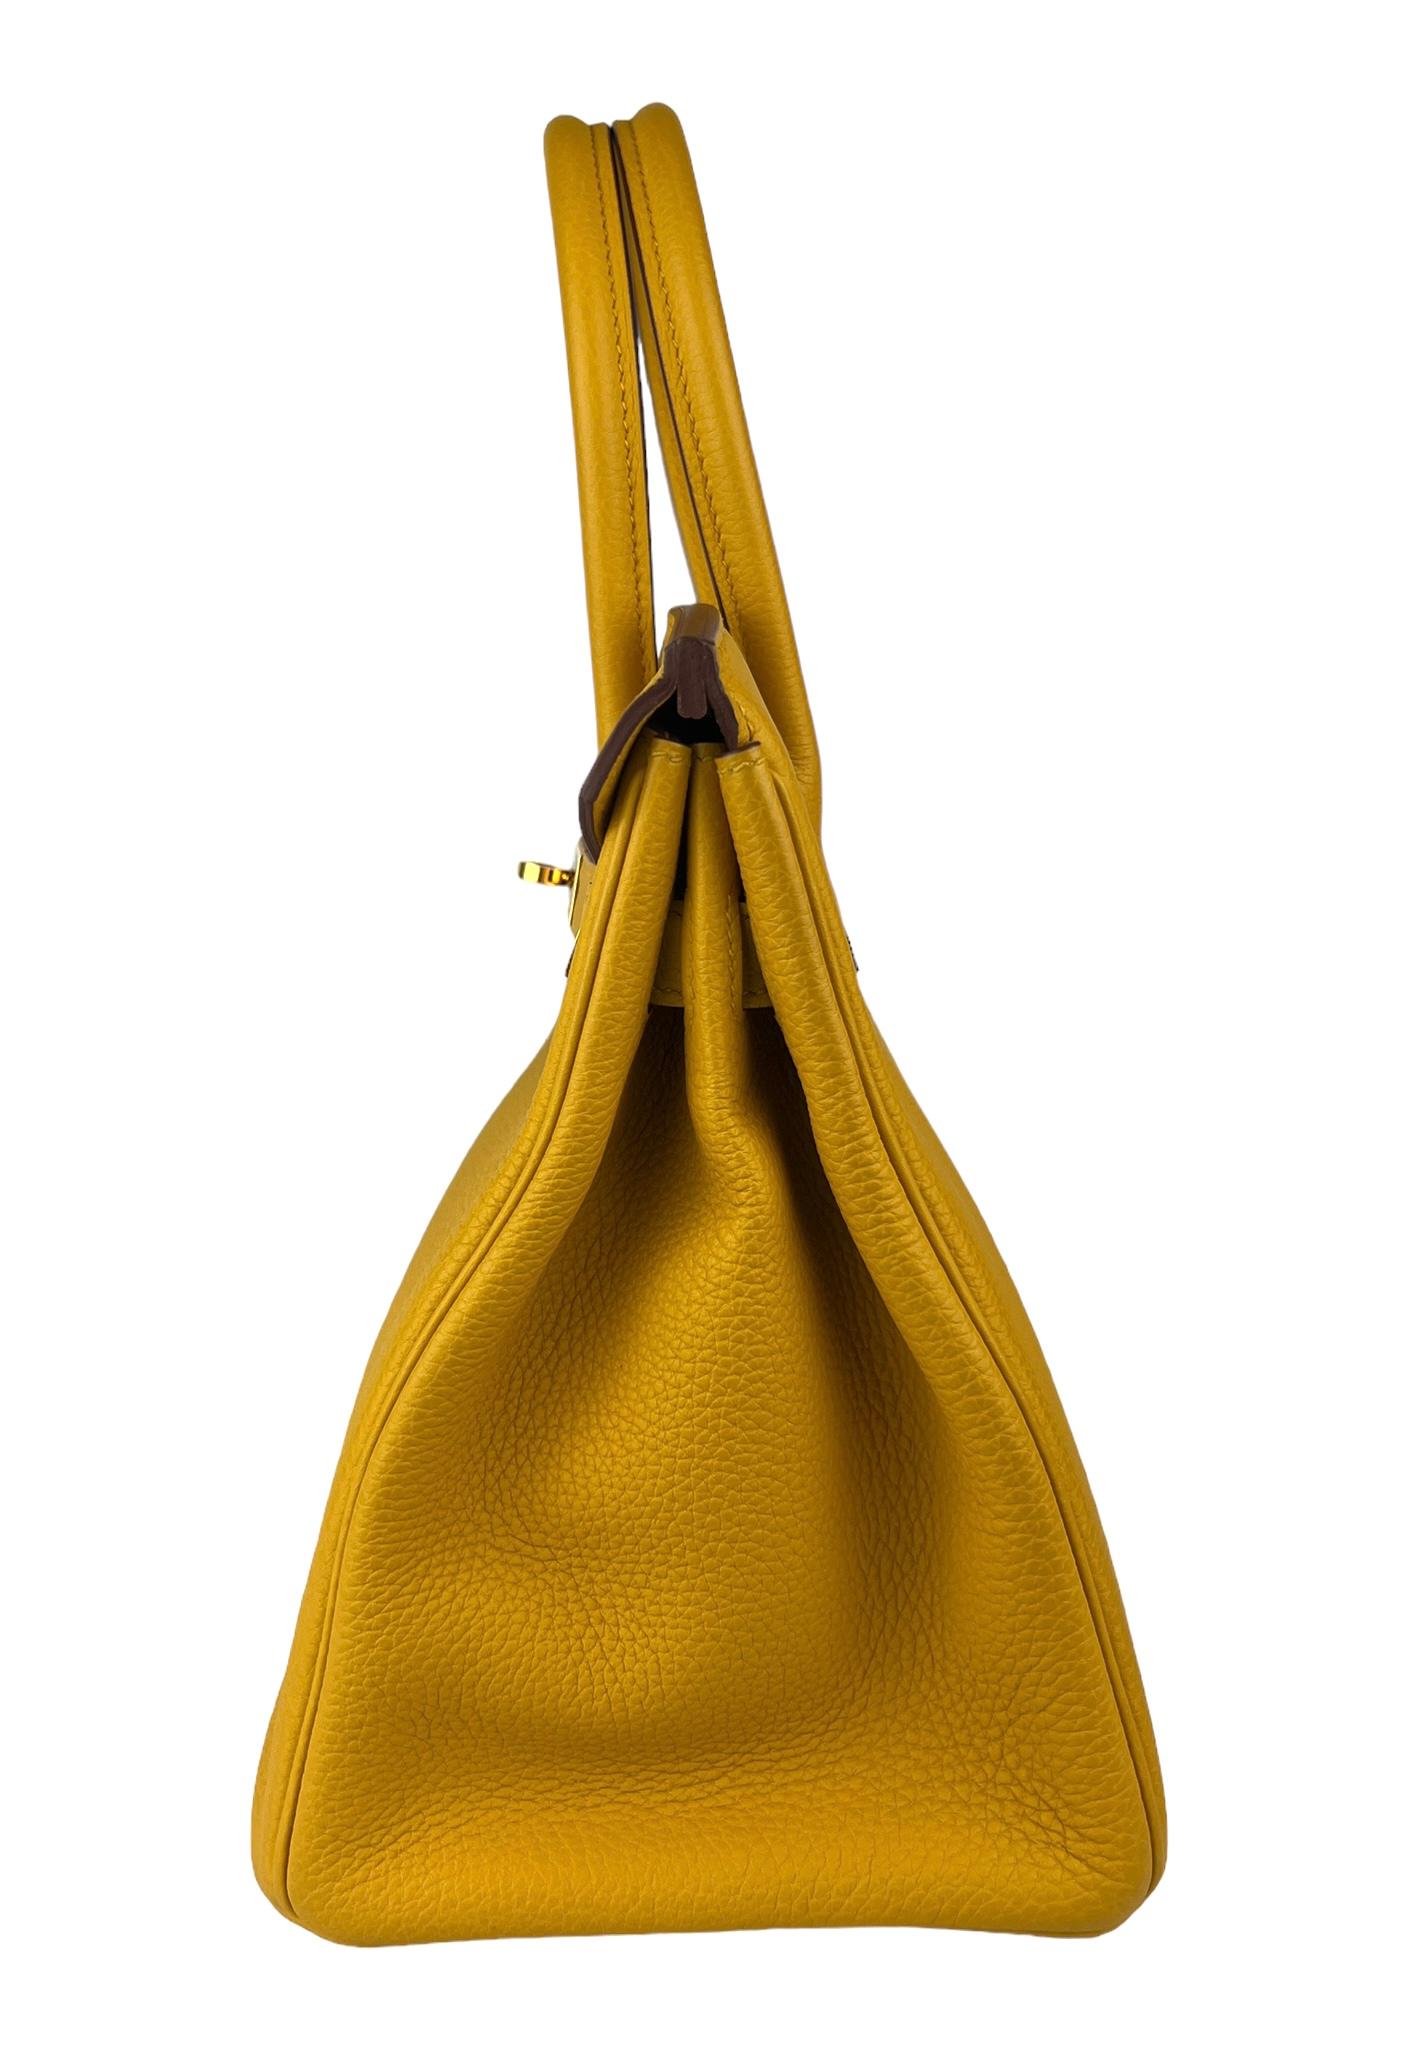 Hermes Birkin 30 Jaune Ambre Yellow Leather Gold Hardware Handbag Bag 3